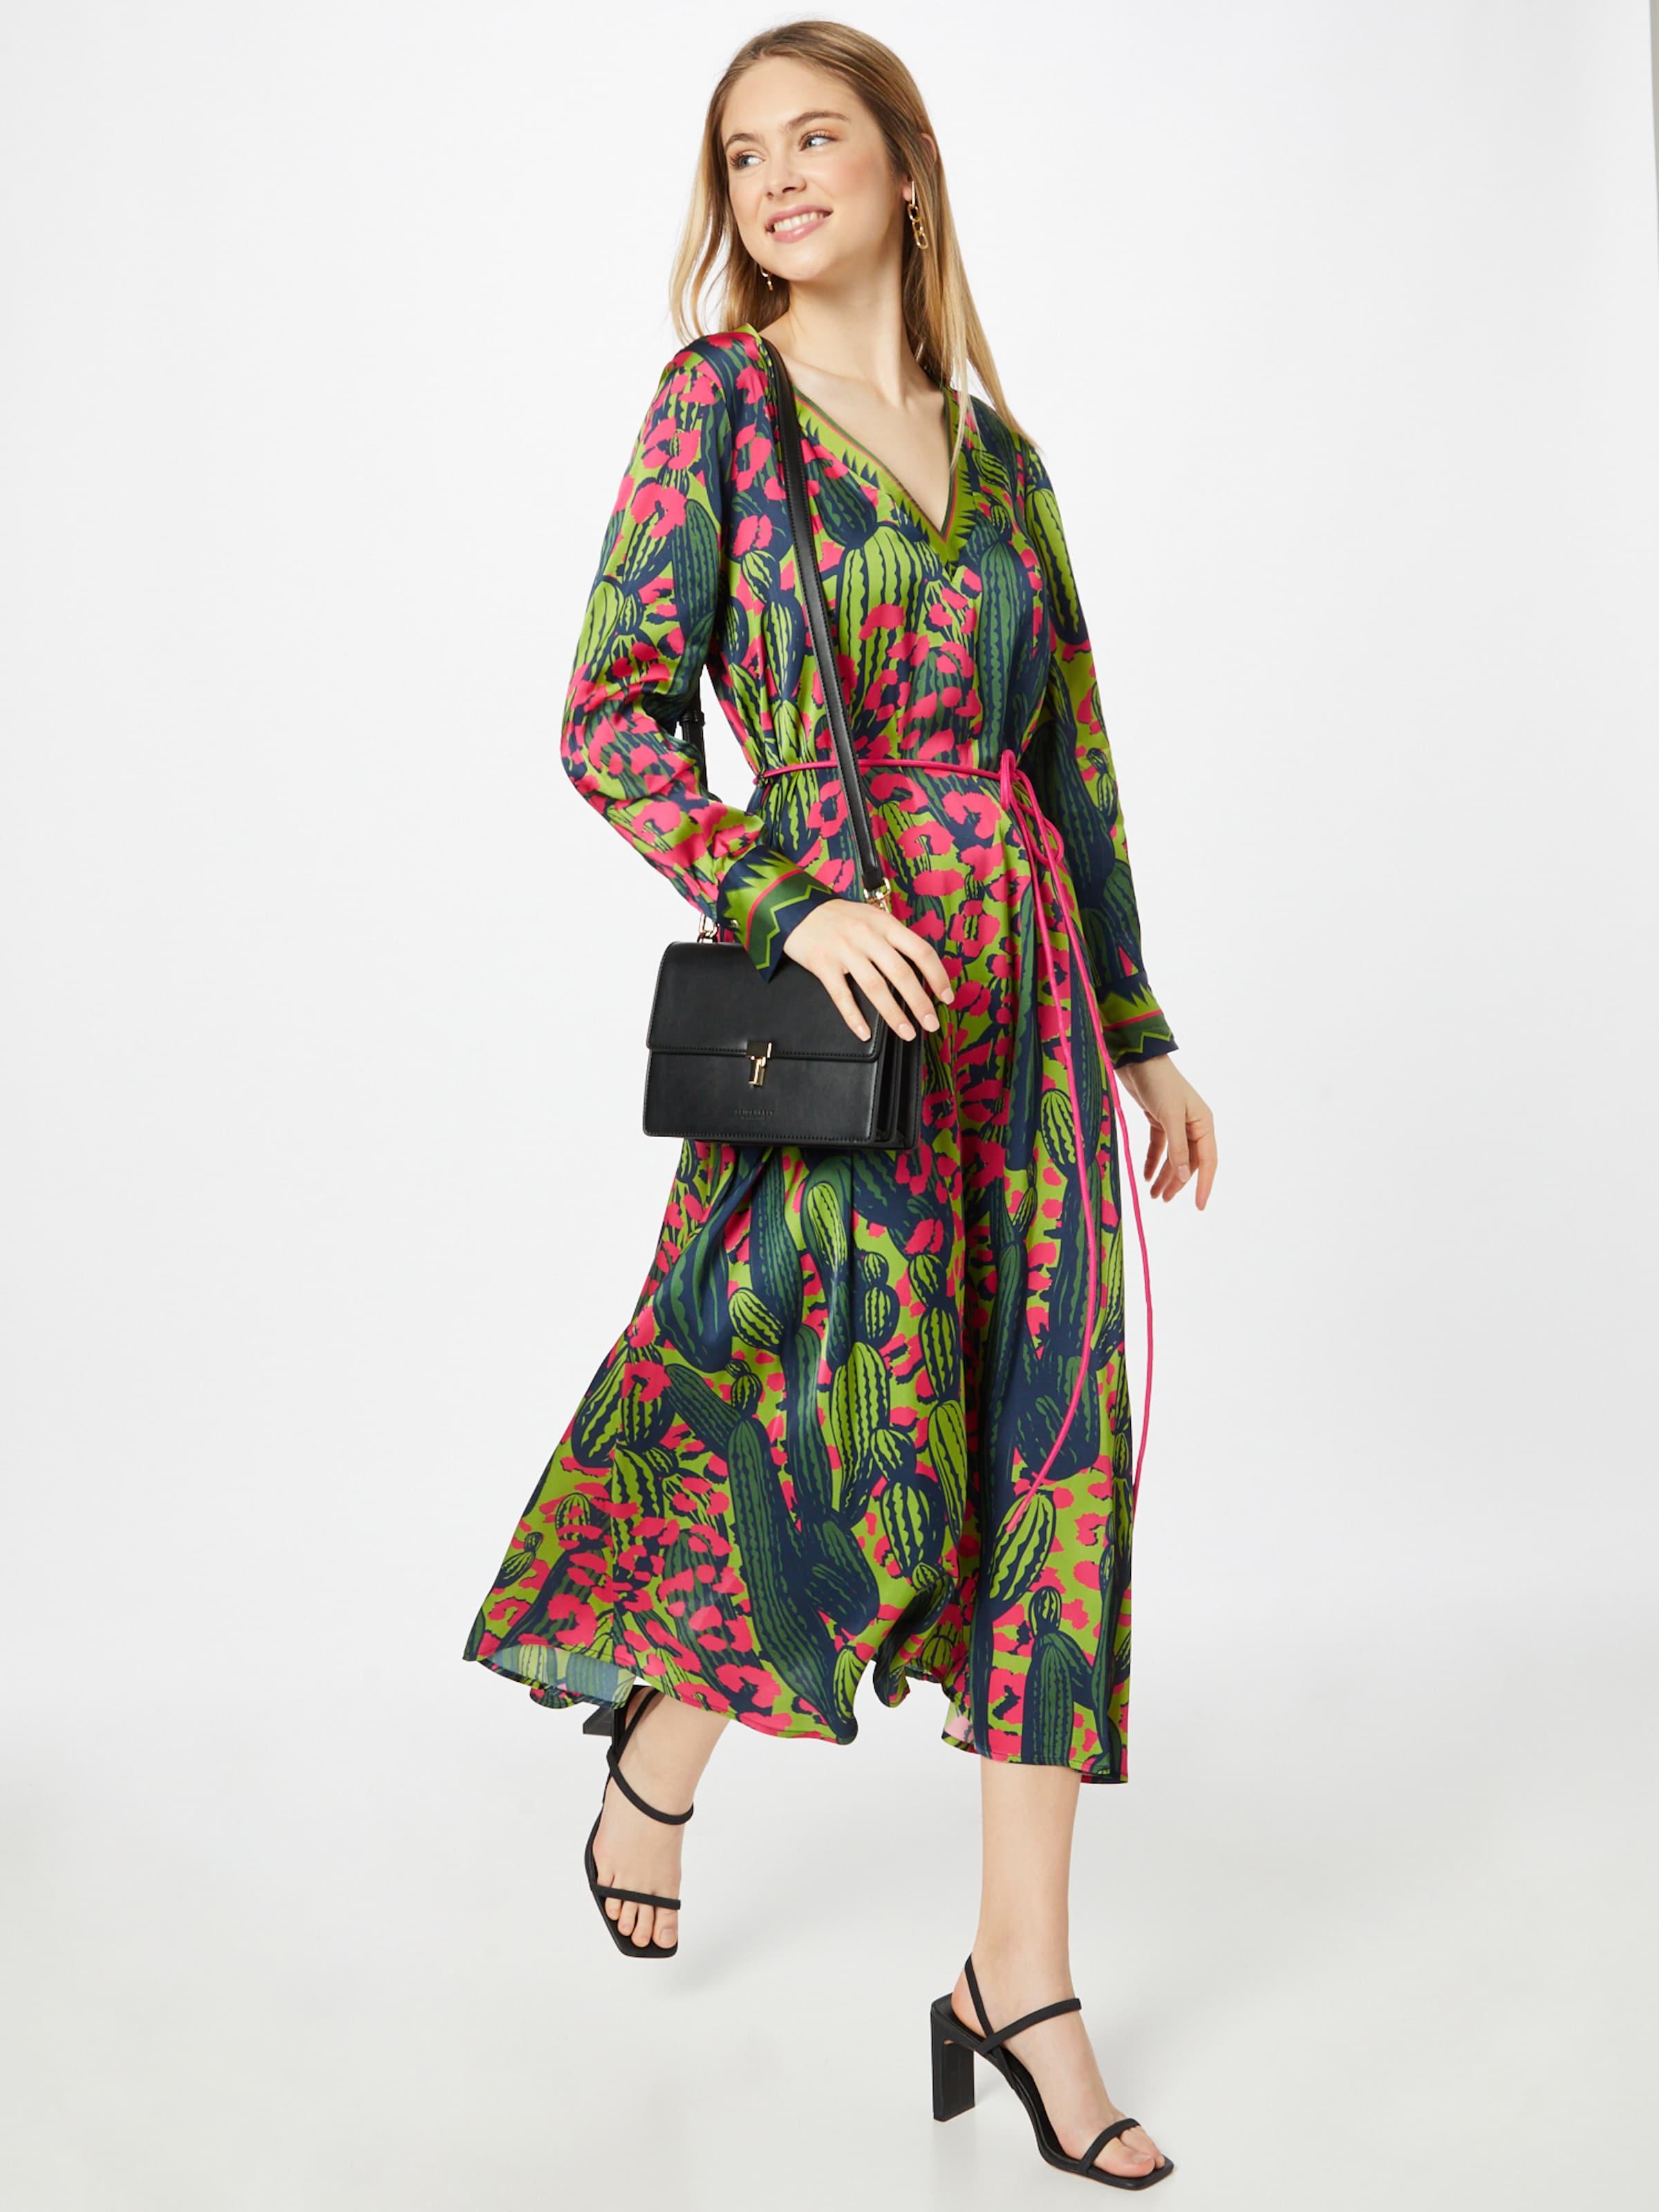 Frauen Kleider DELICATELOVE Kleid 'Shira' in Smaragd, Apfel, Dunkelgrün - IH20422